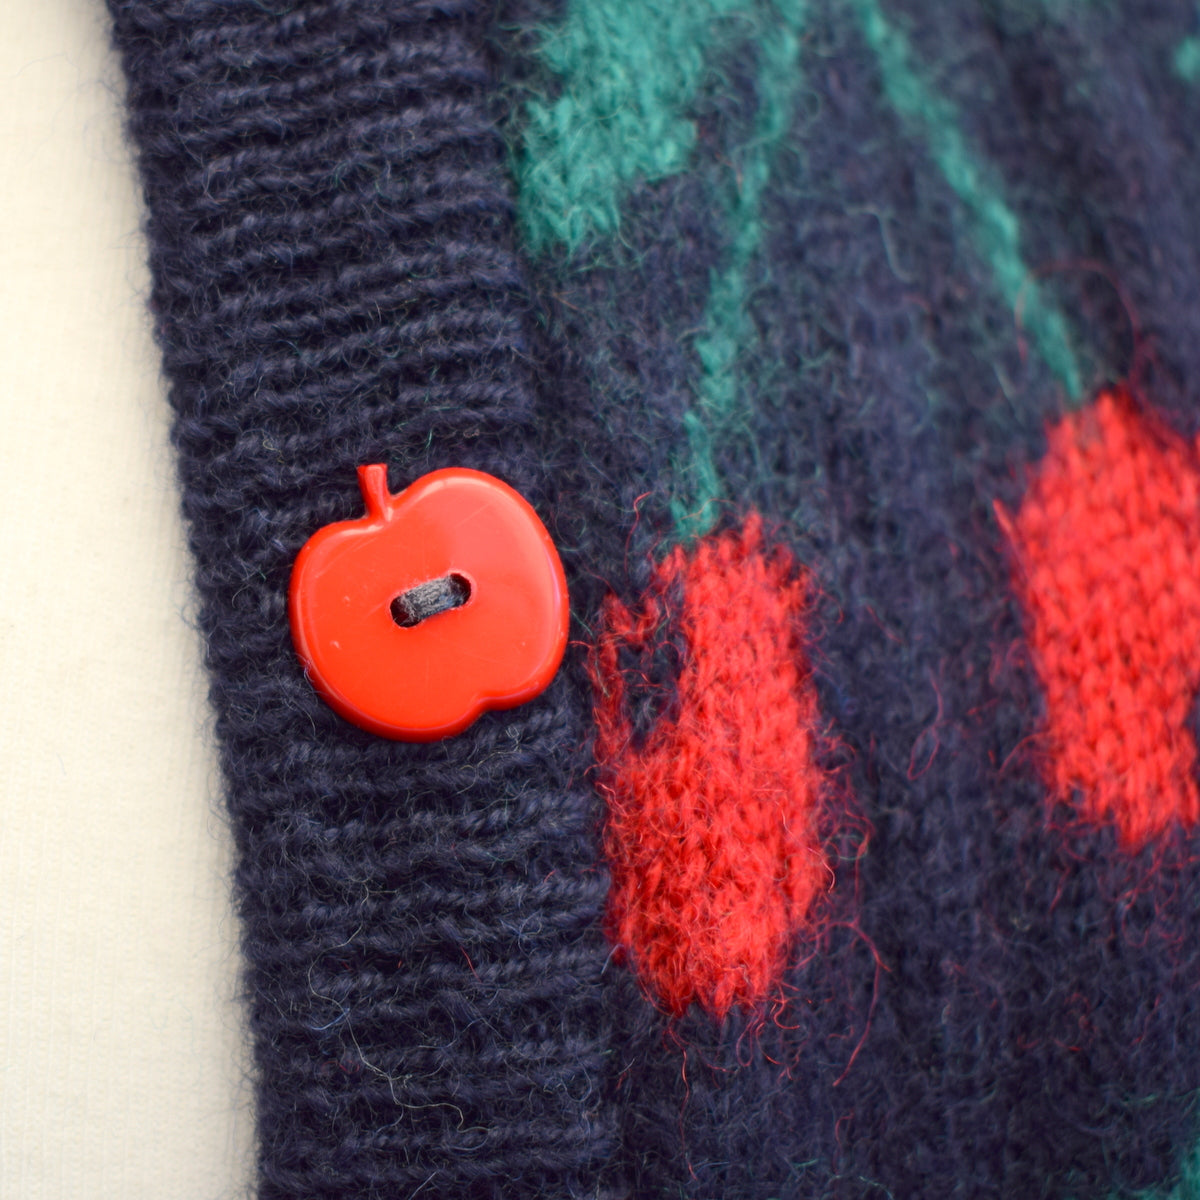 Vintage 1980s Cherry Print Cardigan - Apple Buttons - 100% Wool - Medium